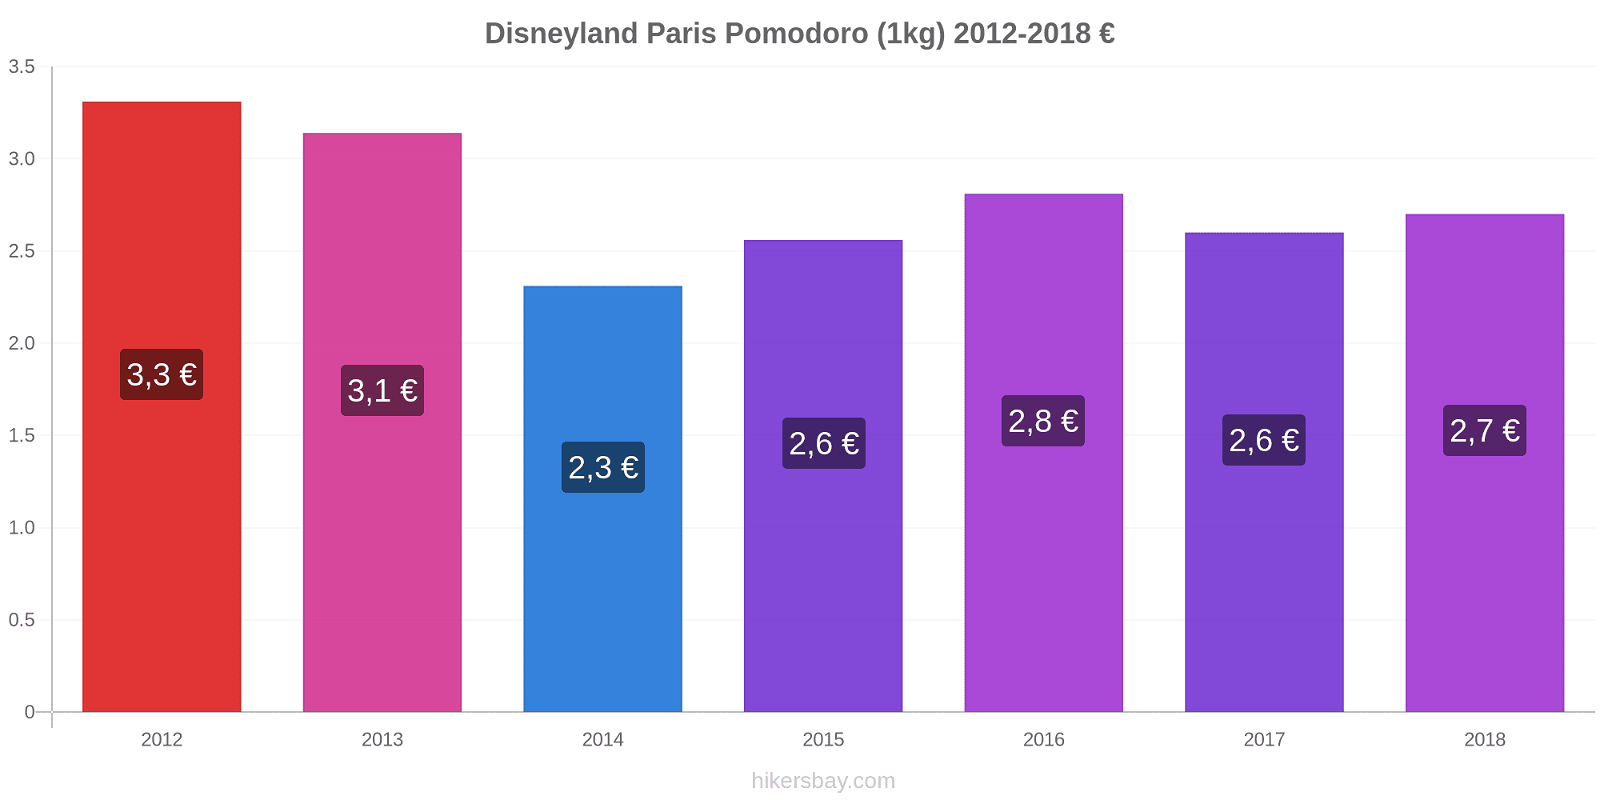 Disneyland Paris variazioni di prezzo Pomodoro (1kg) hikersbay.com